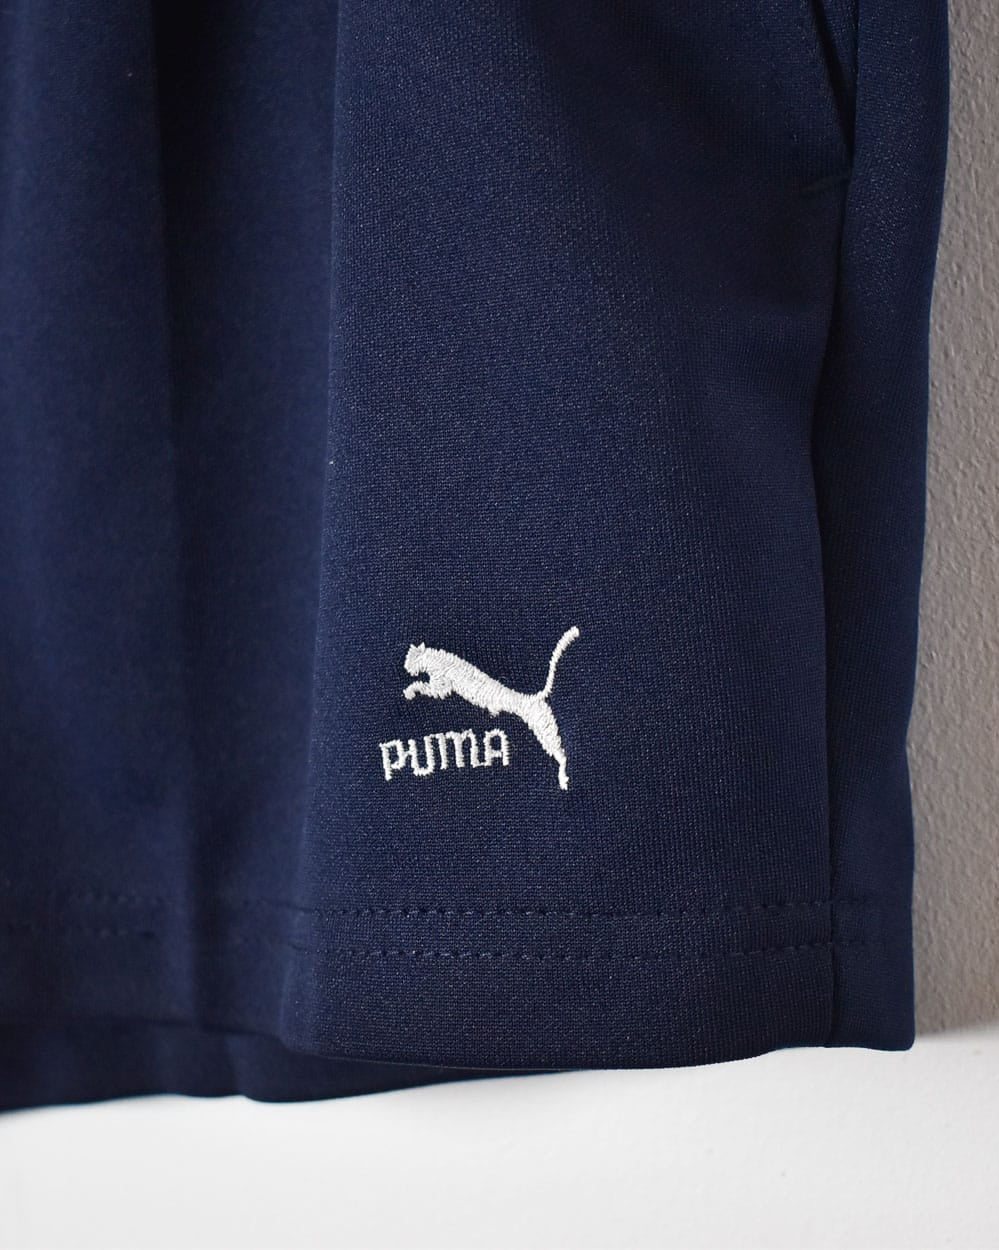 Navy Puma Tennis Shorts - Medium Women's